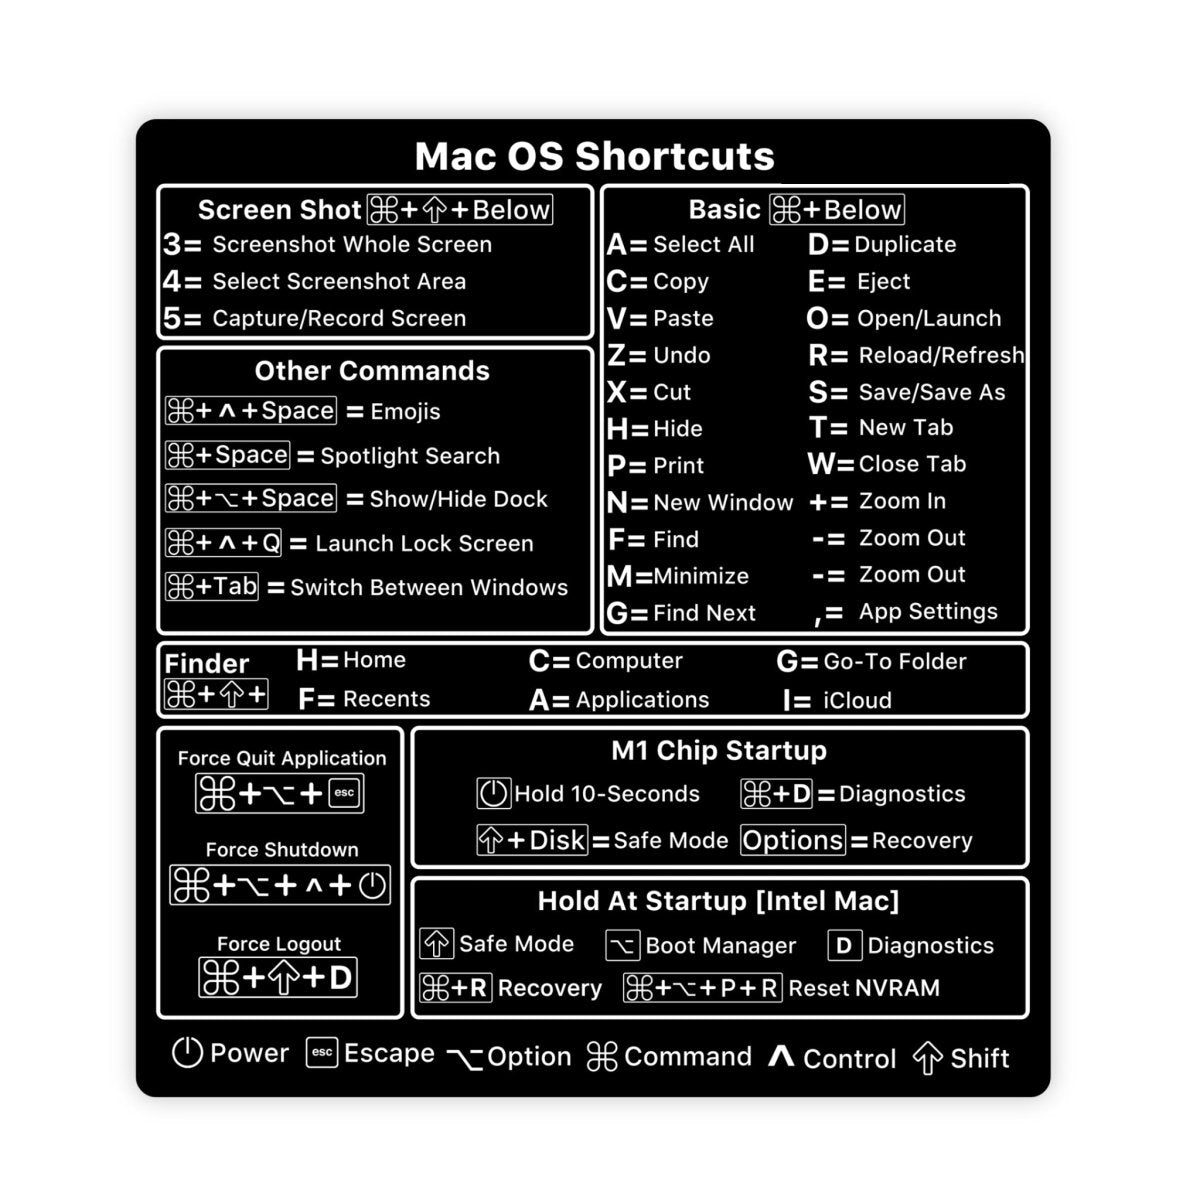 [M1/M2/Intel] Rainbow Mac OS Shortcut Sticker [Works With All Mac Laptops] - stickerbull[M1/M2/Intel] Rainbow Mac OS Shortcut Sticker [Works With All Mac Laptops]Retail StickerstickerbullstickerbullTaylor_BlackMac [#77]Black[M1/M2/Intel] Rainbow Mac OS Shortcut Sticker [Works With All Mac Laptops]